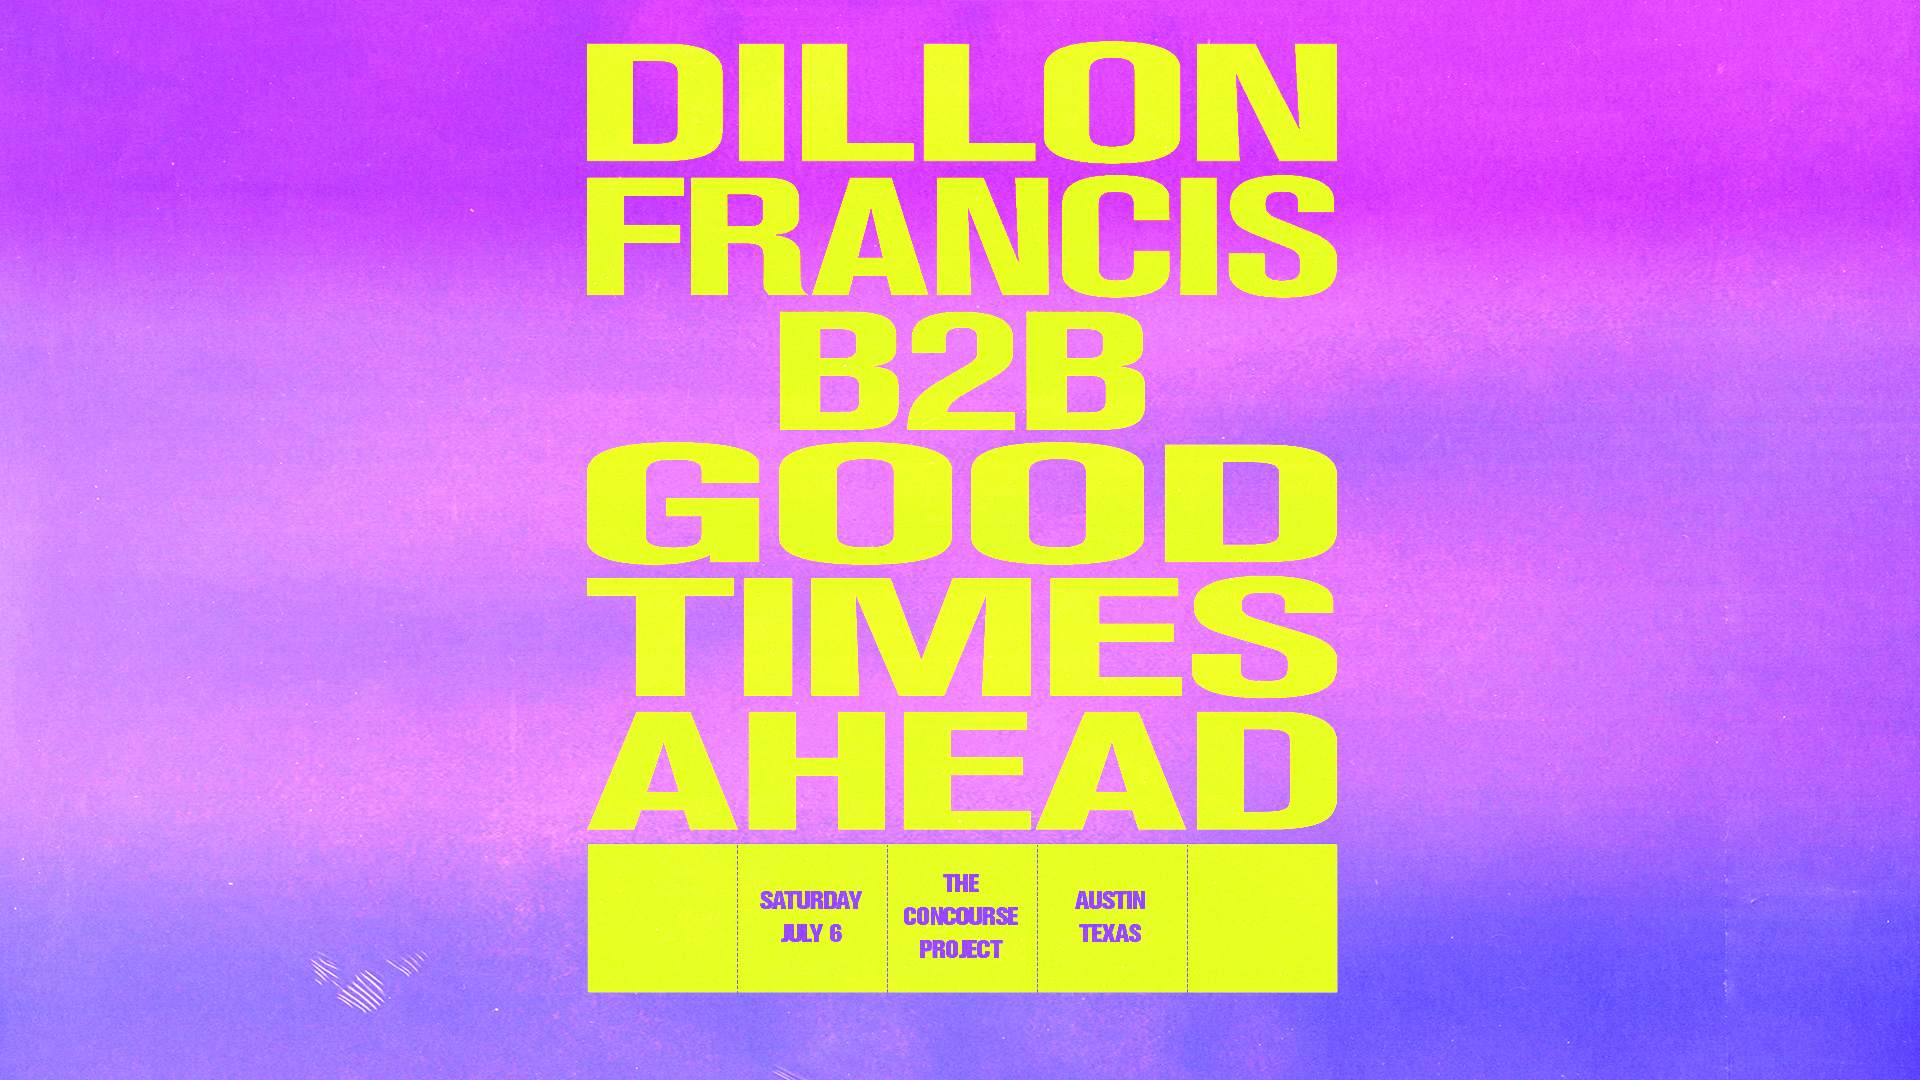 Dillon Francis b2b Good Times Ahead - Página frontal